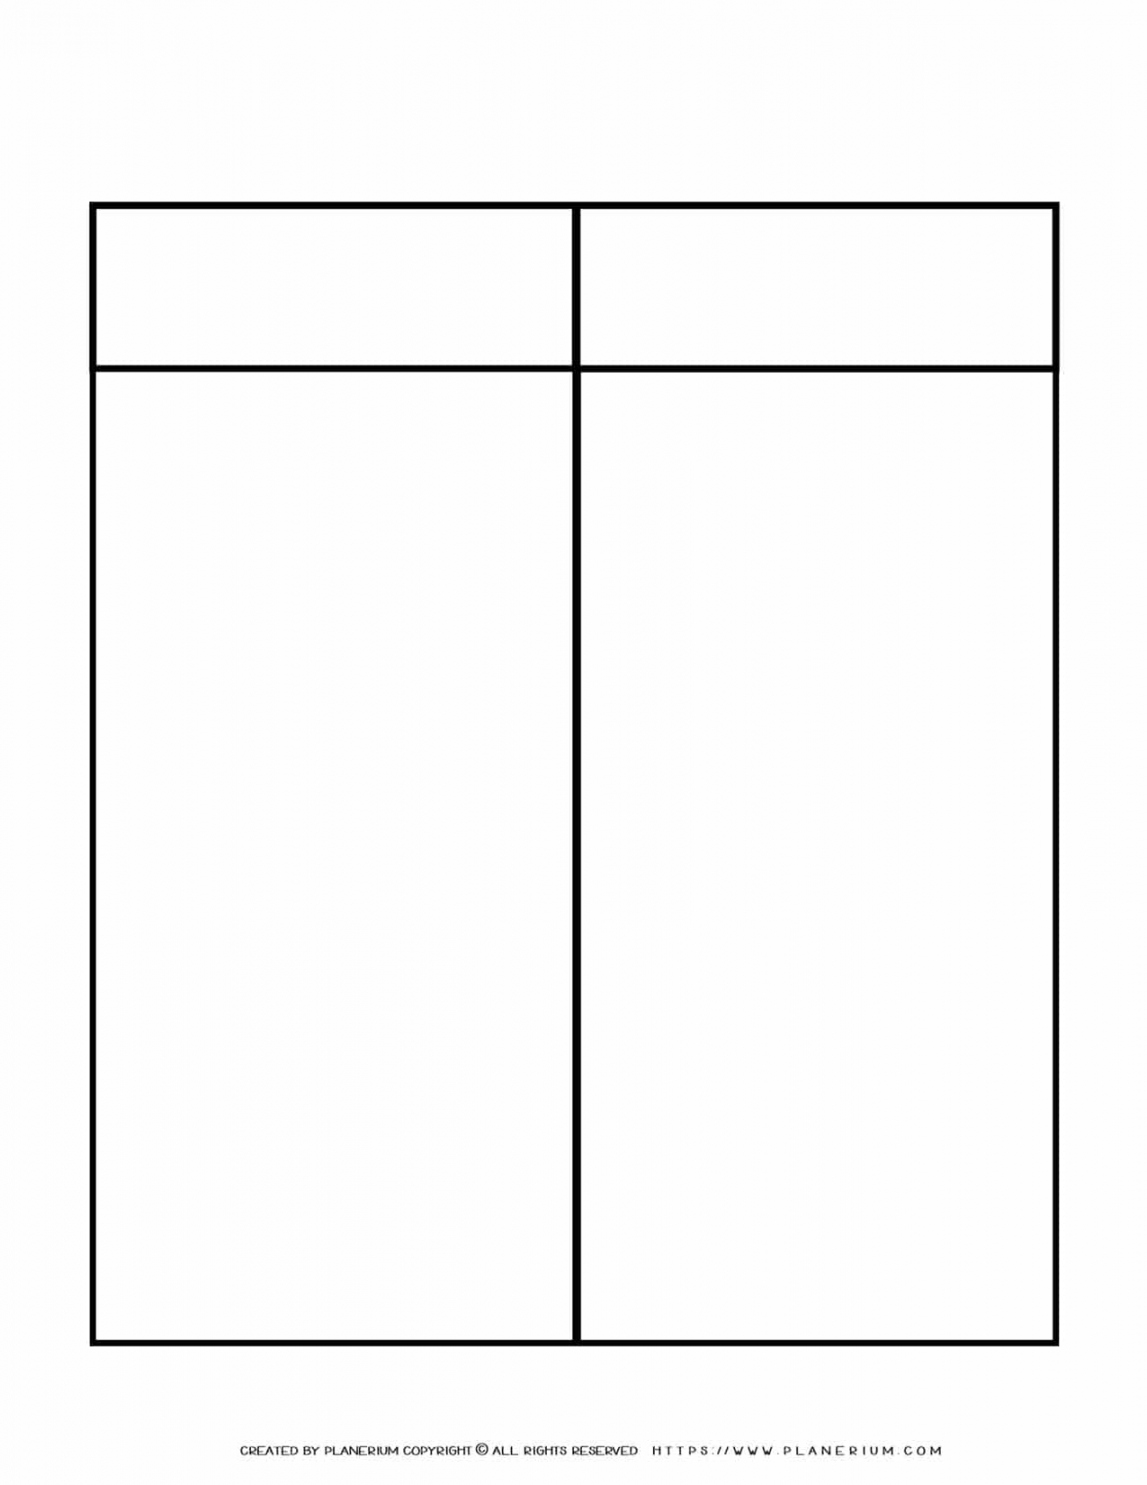 Graphic Organizer Templates - Two Columns One Row Chart  Planerium - FREE Printables - 2 Column Chart